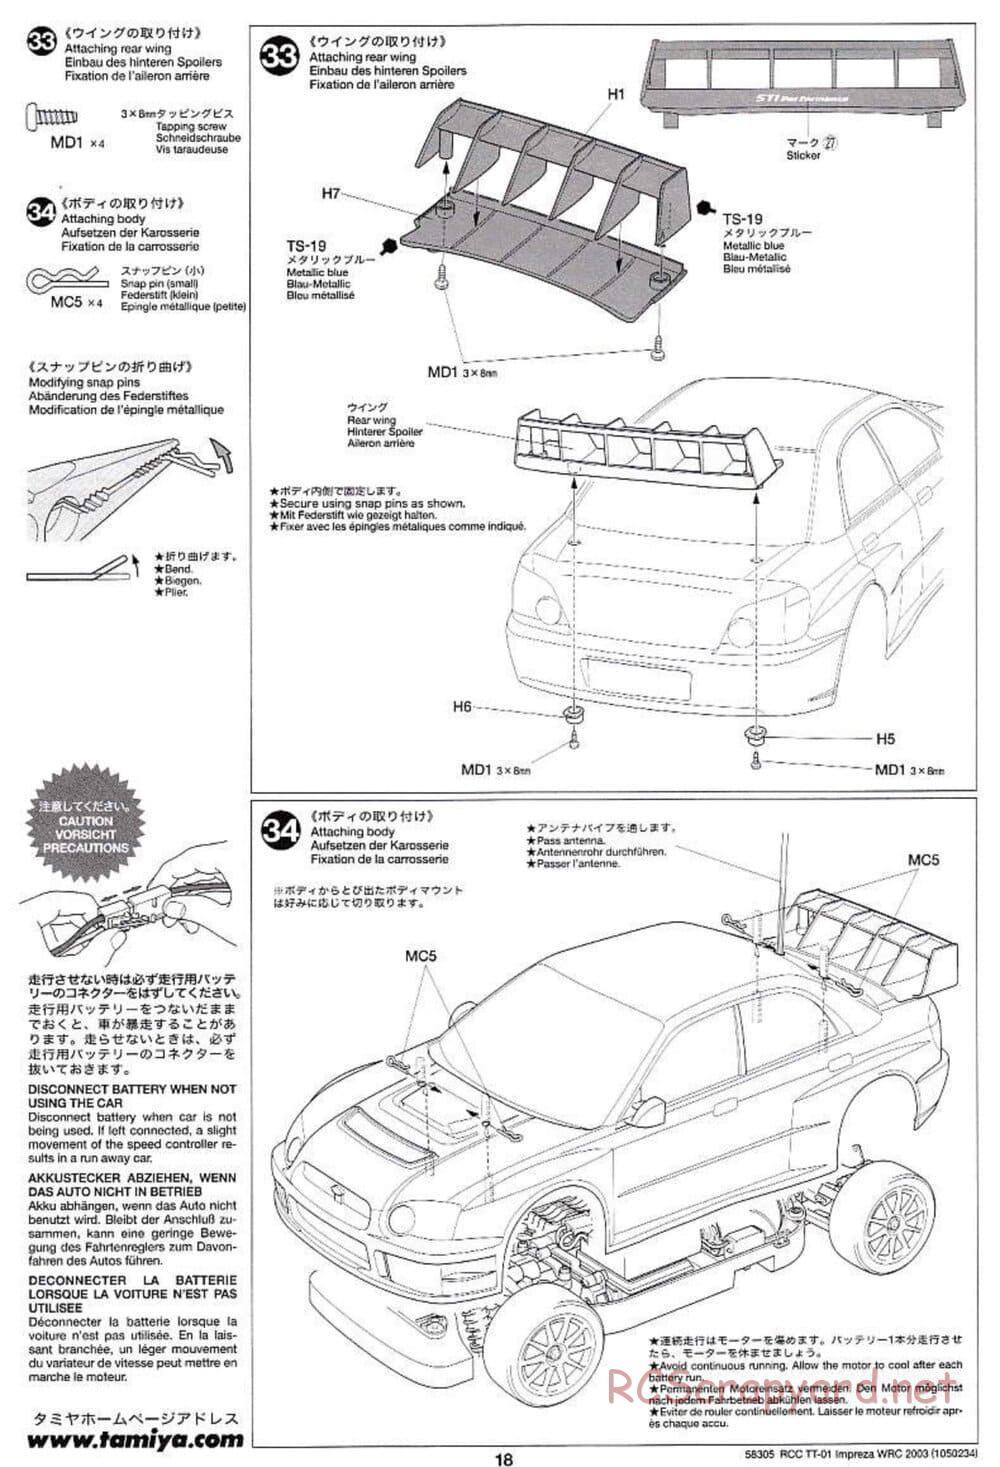 Tamiya - Subaru Impreza WRC 2003 - TT-01 Chassis - Manual - Page 18